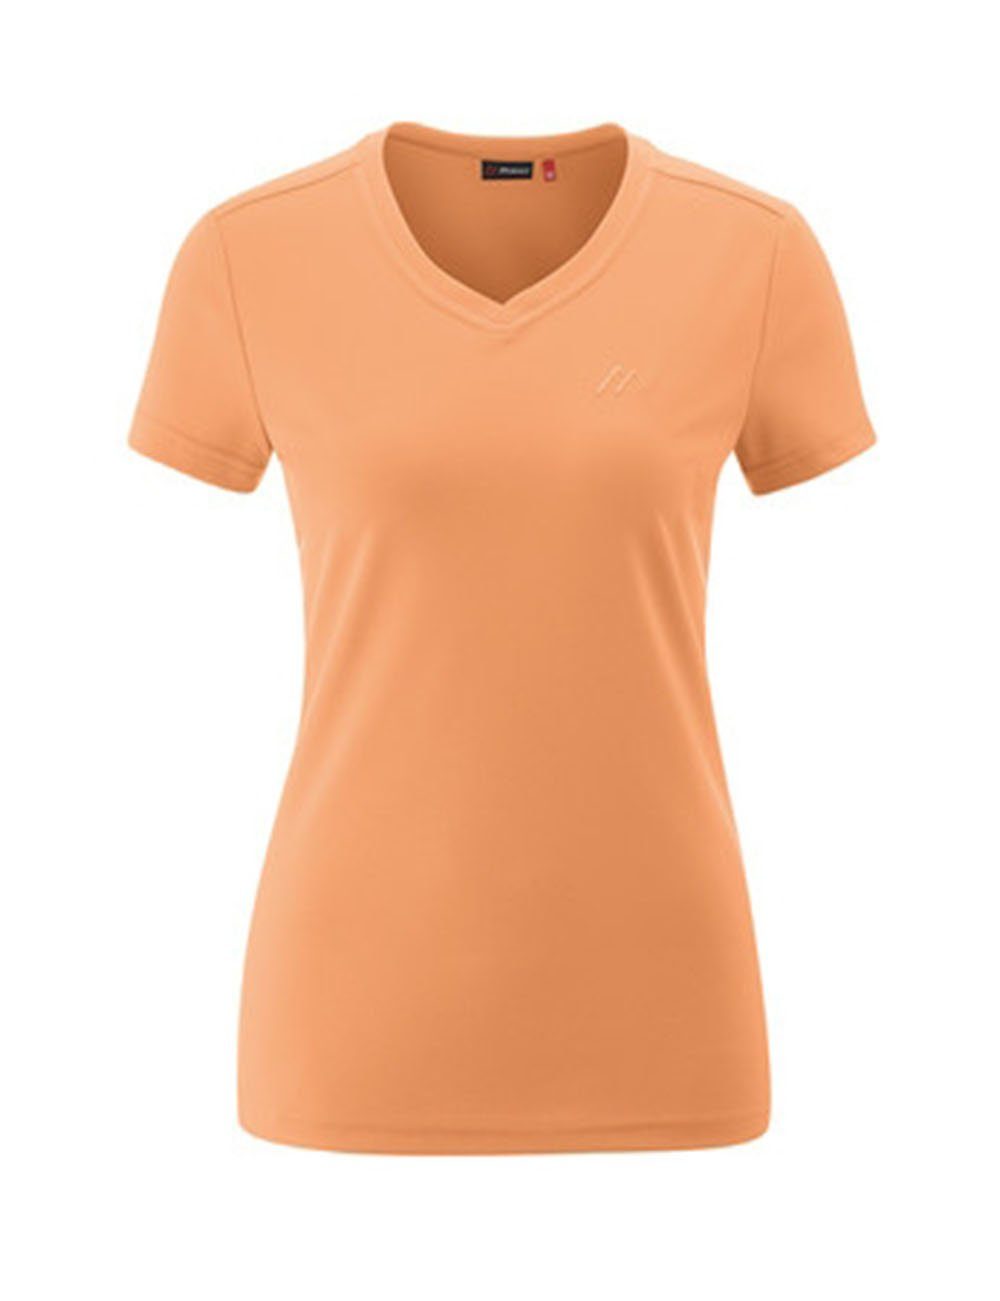 Maier Sports Laufshirt Maier orange Trudy Da. T-Shirt 252310 Sports